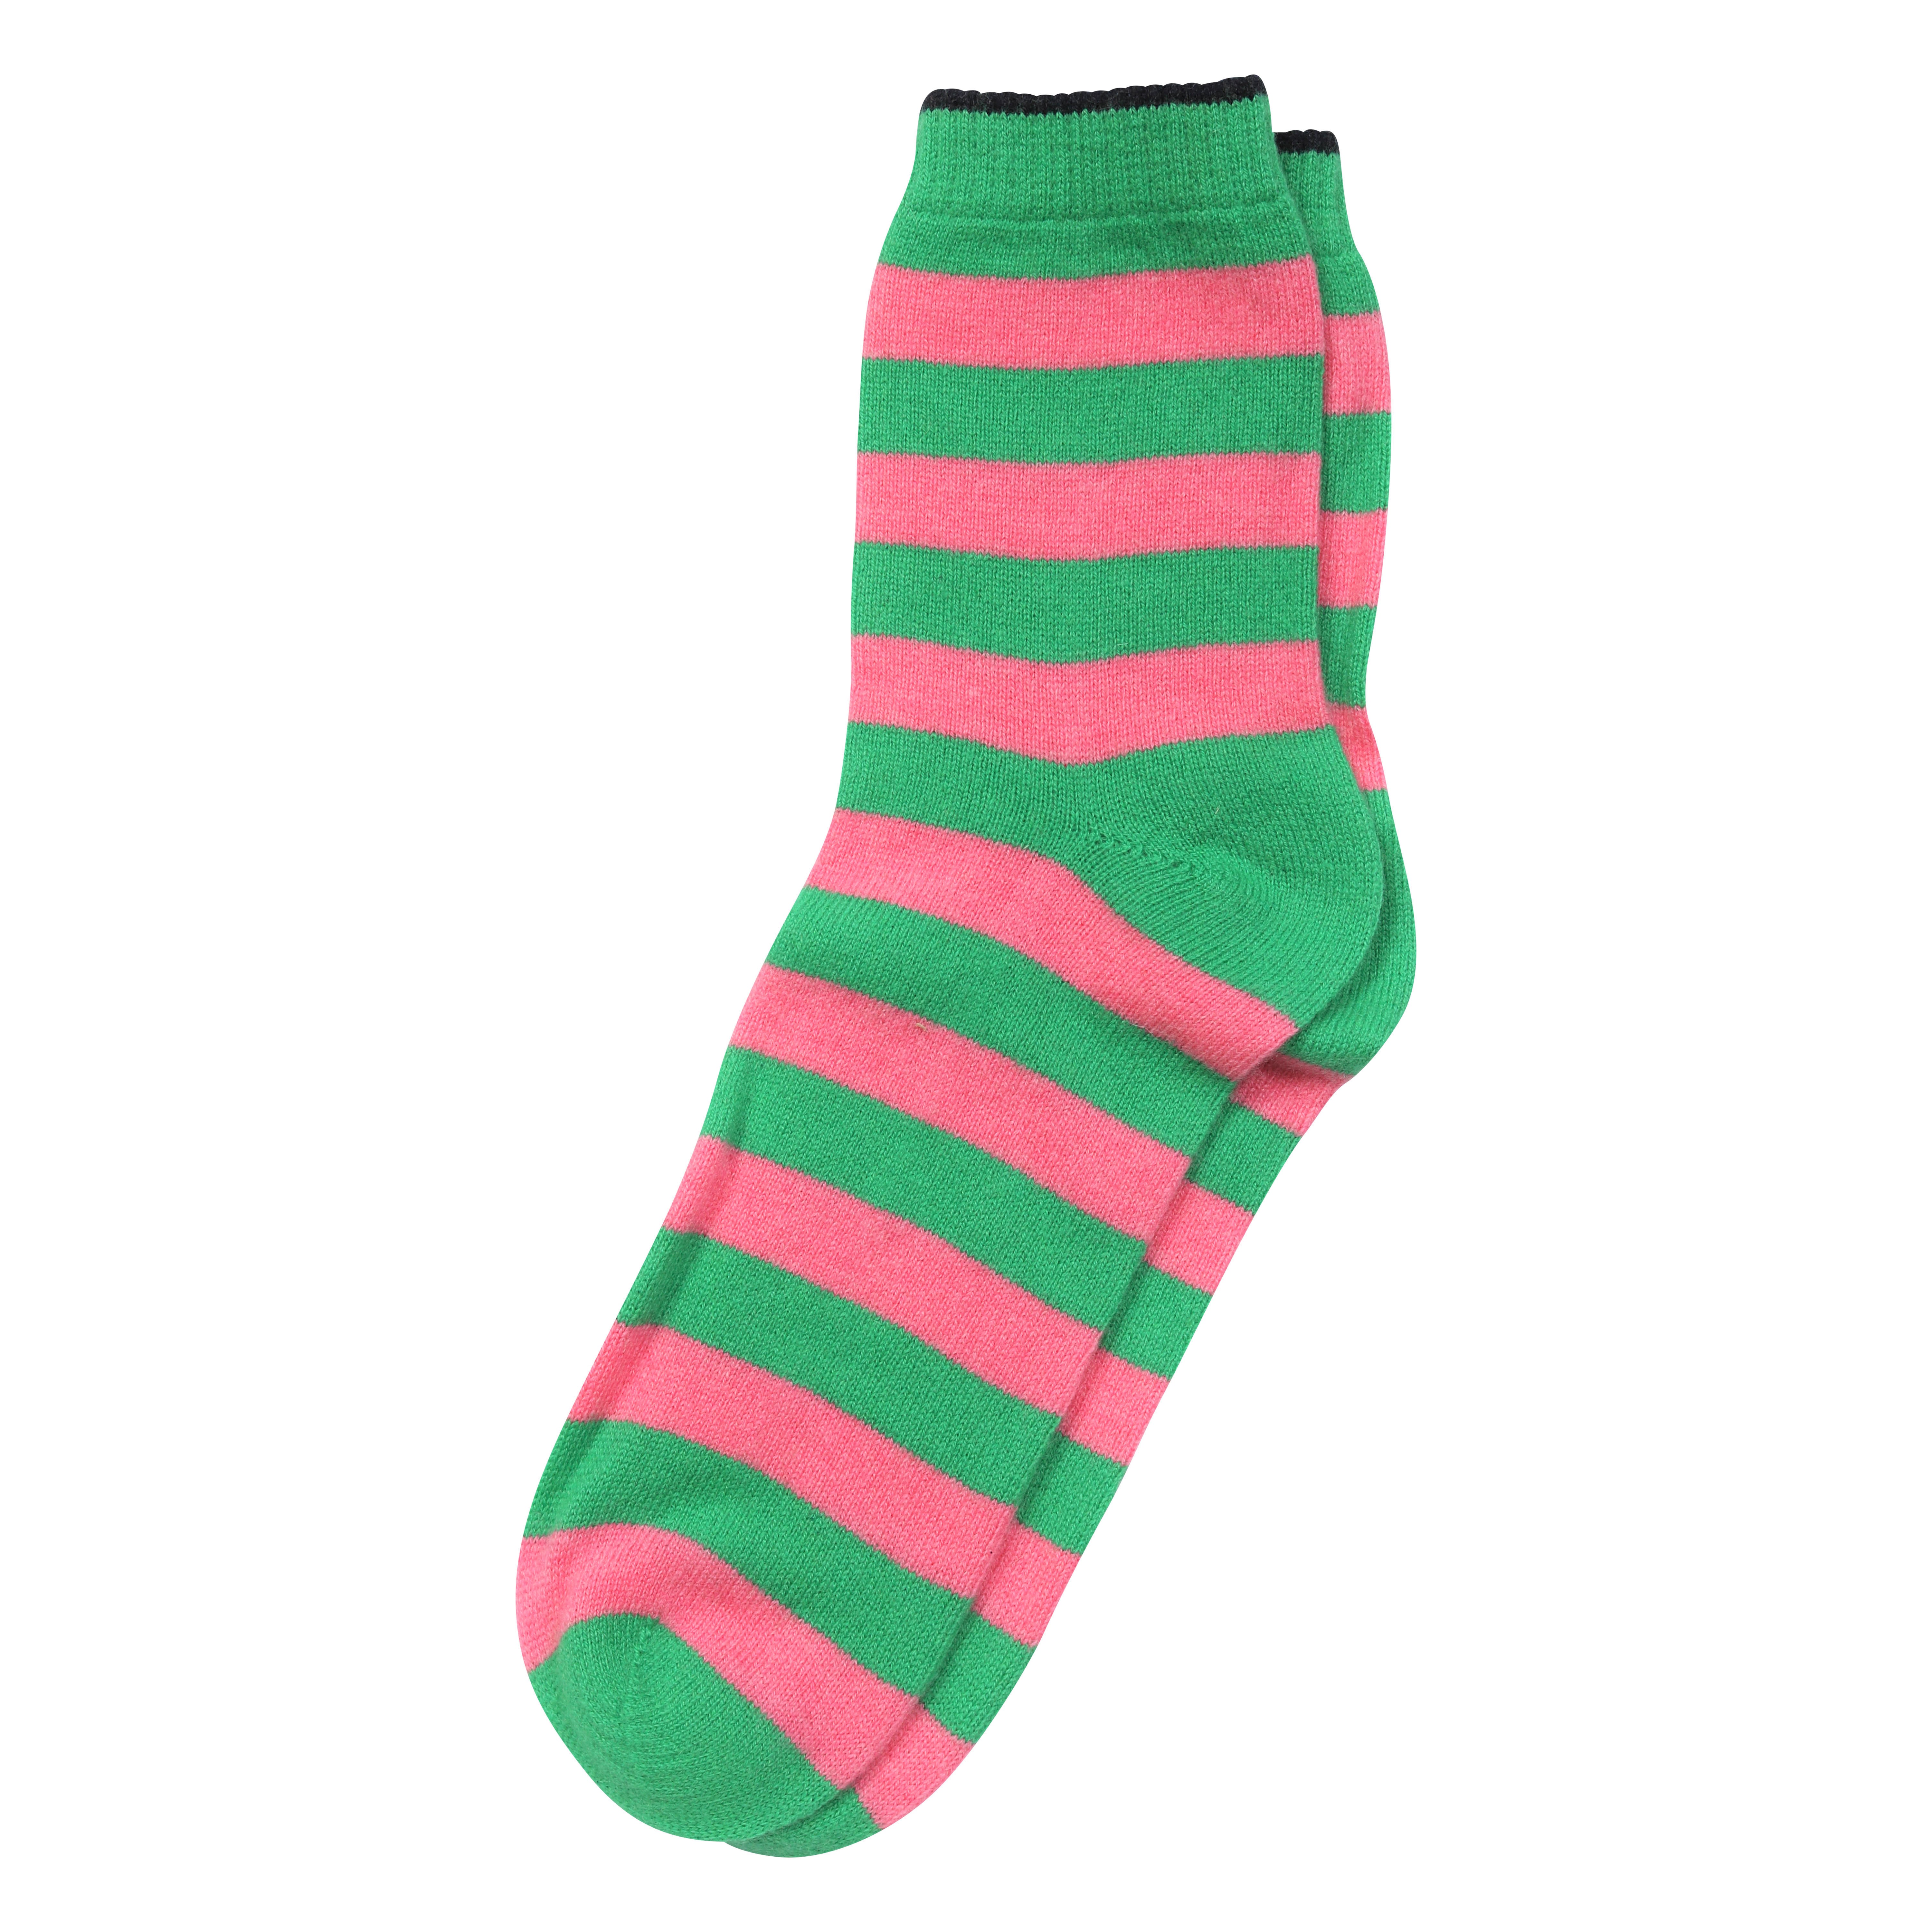 Jumper1234 Cashmere Stripe Socks in Bright Green / Candy Pink